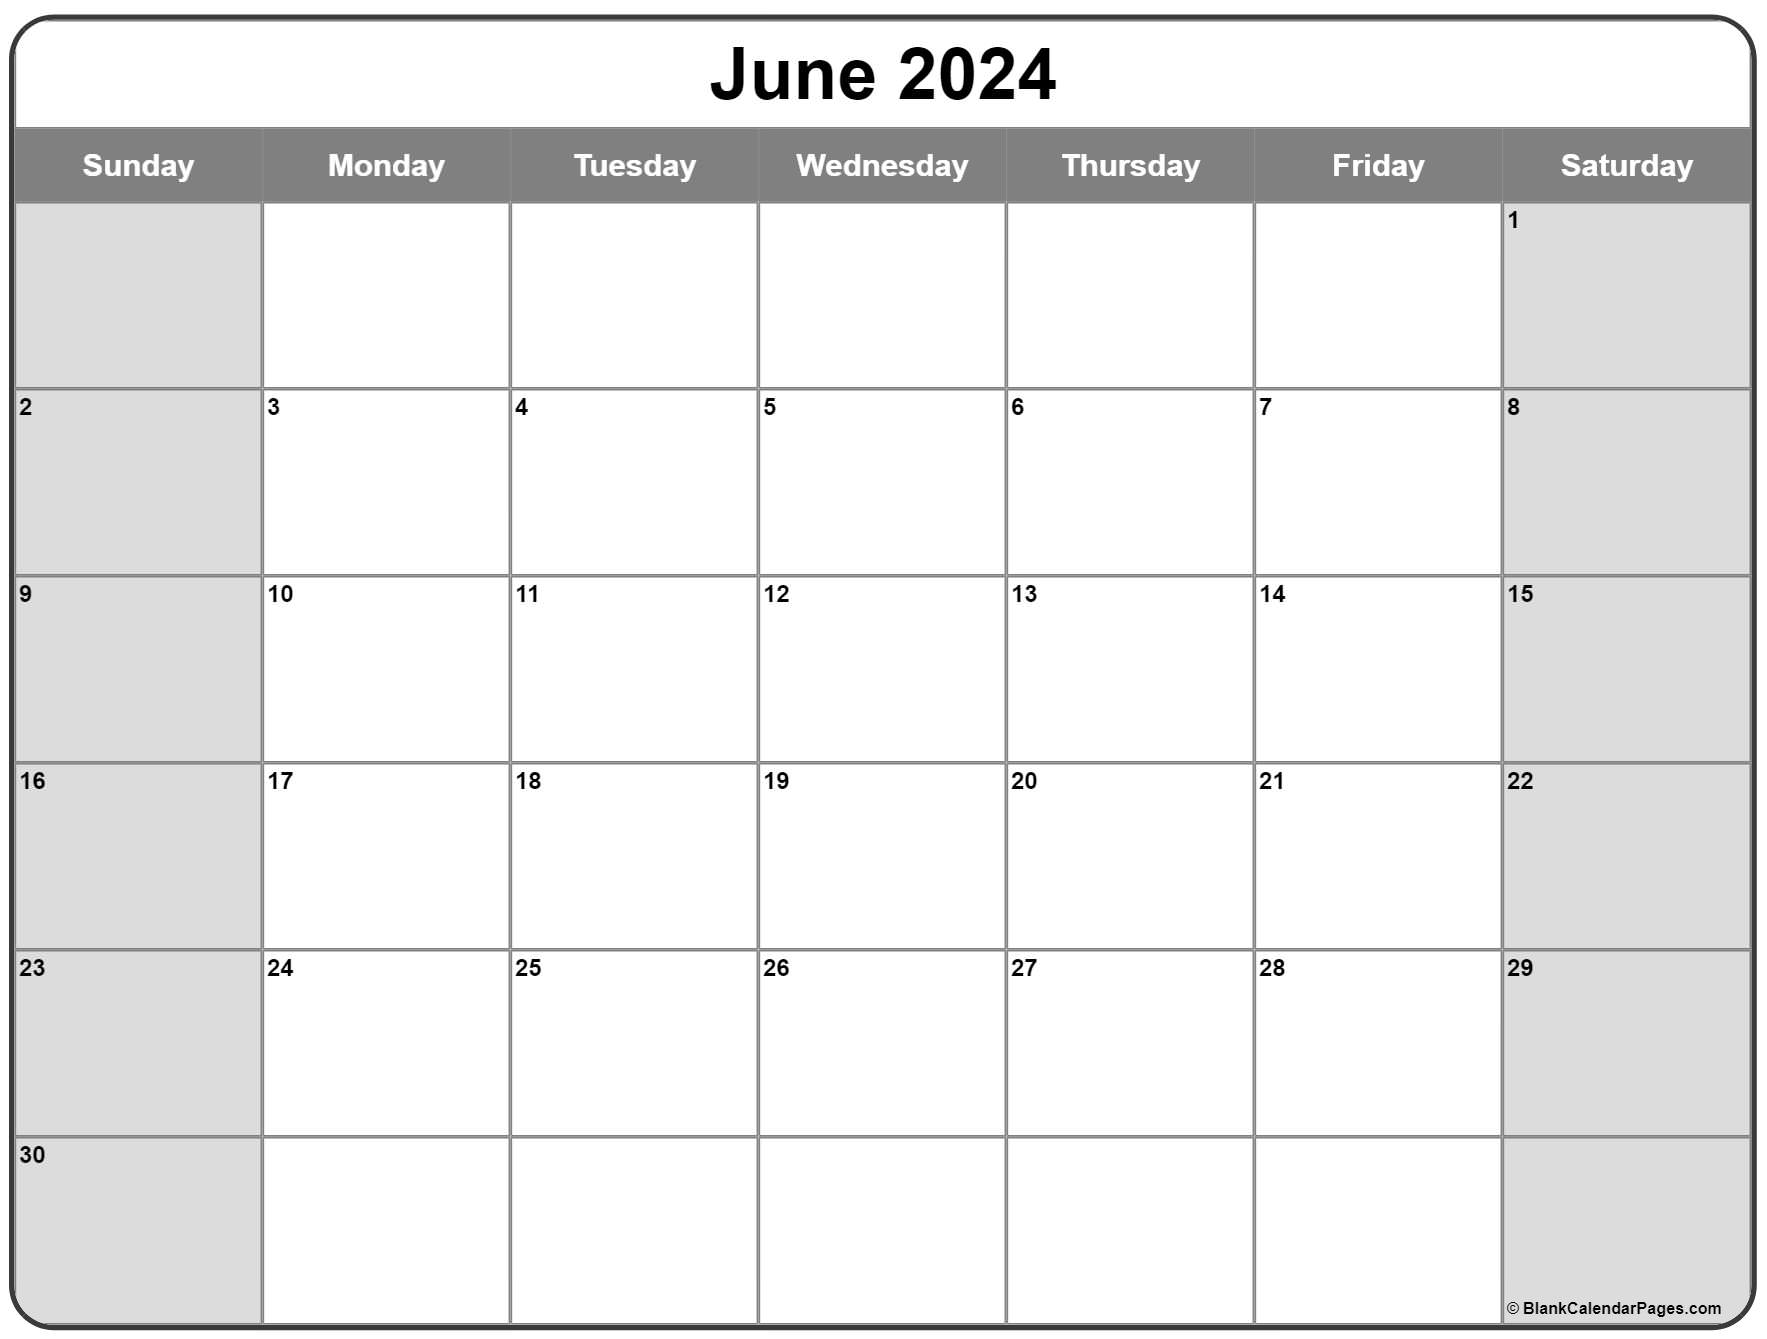 June 2023 calendar | free printable calendar